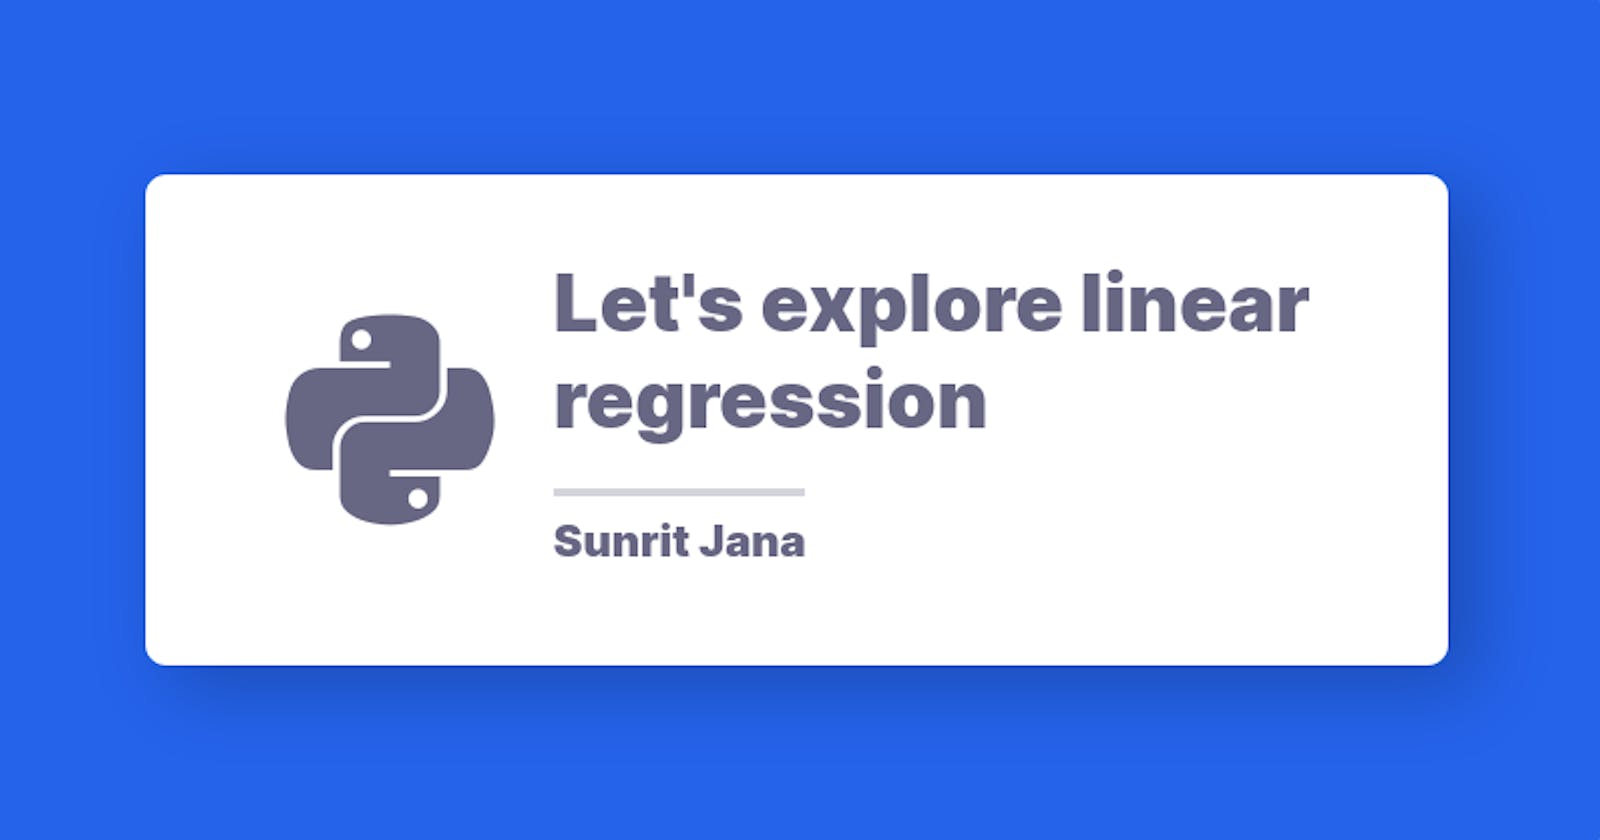 Let's explore linear regression!